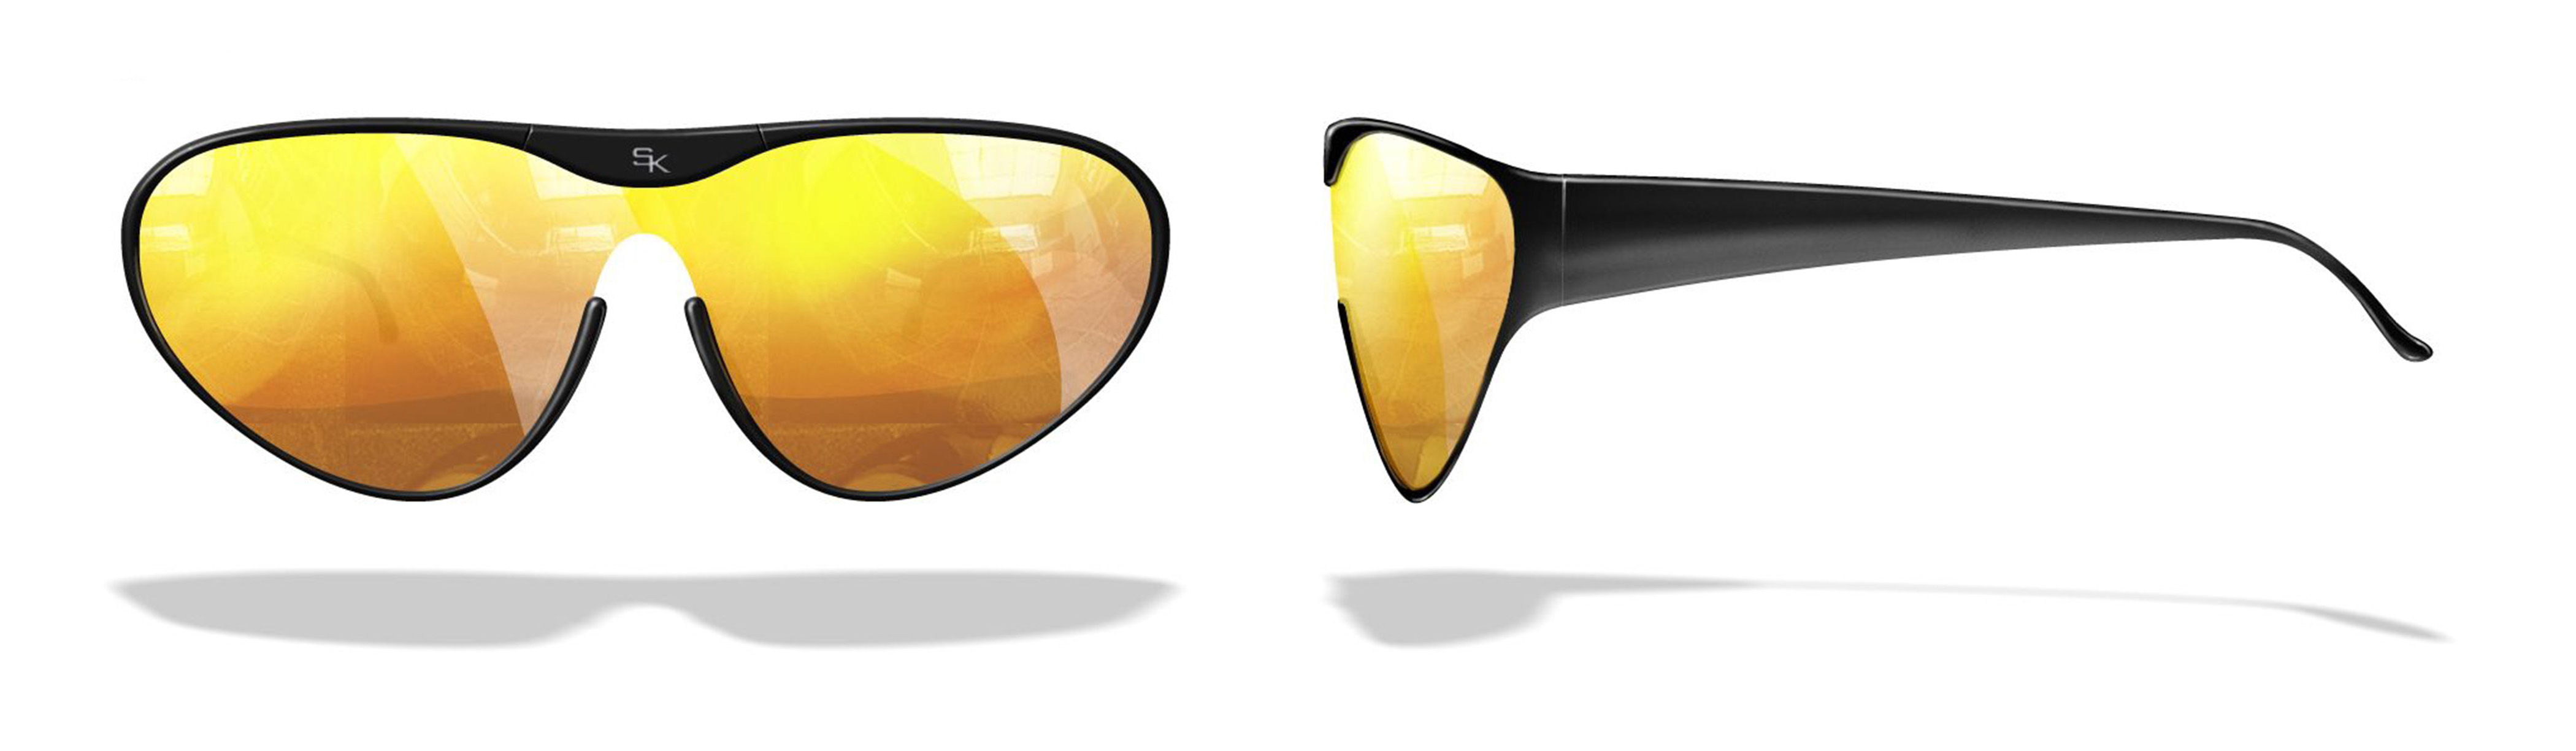 glasses industrial design amber